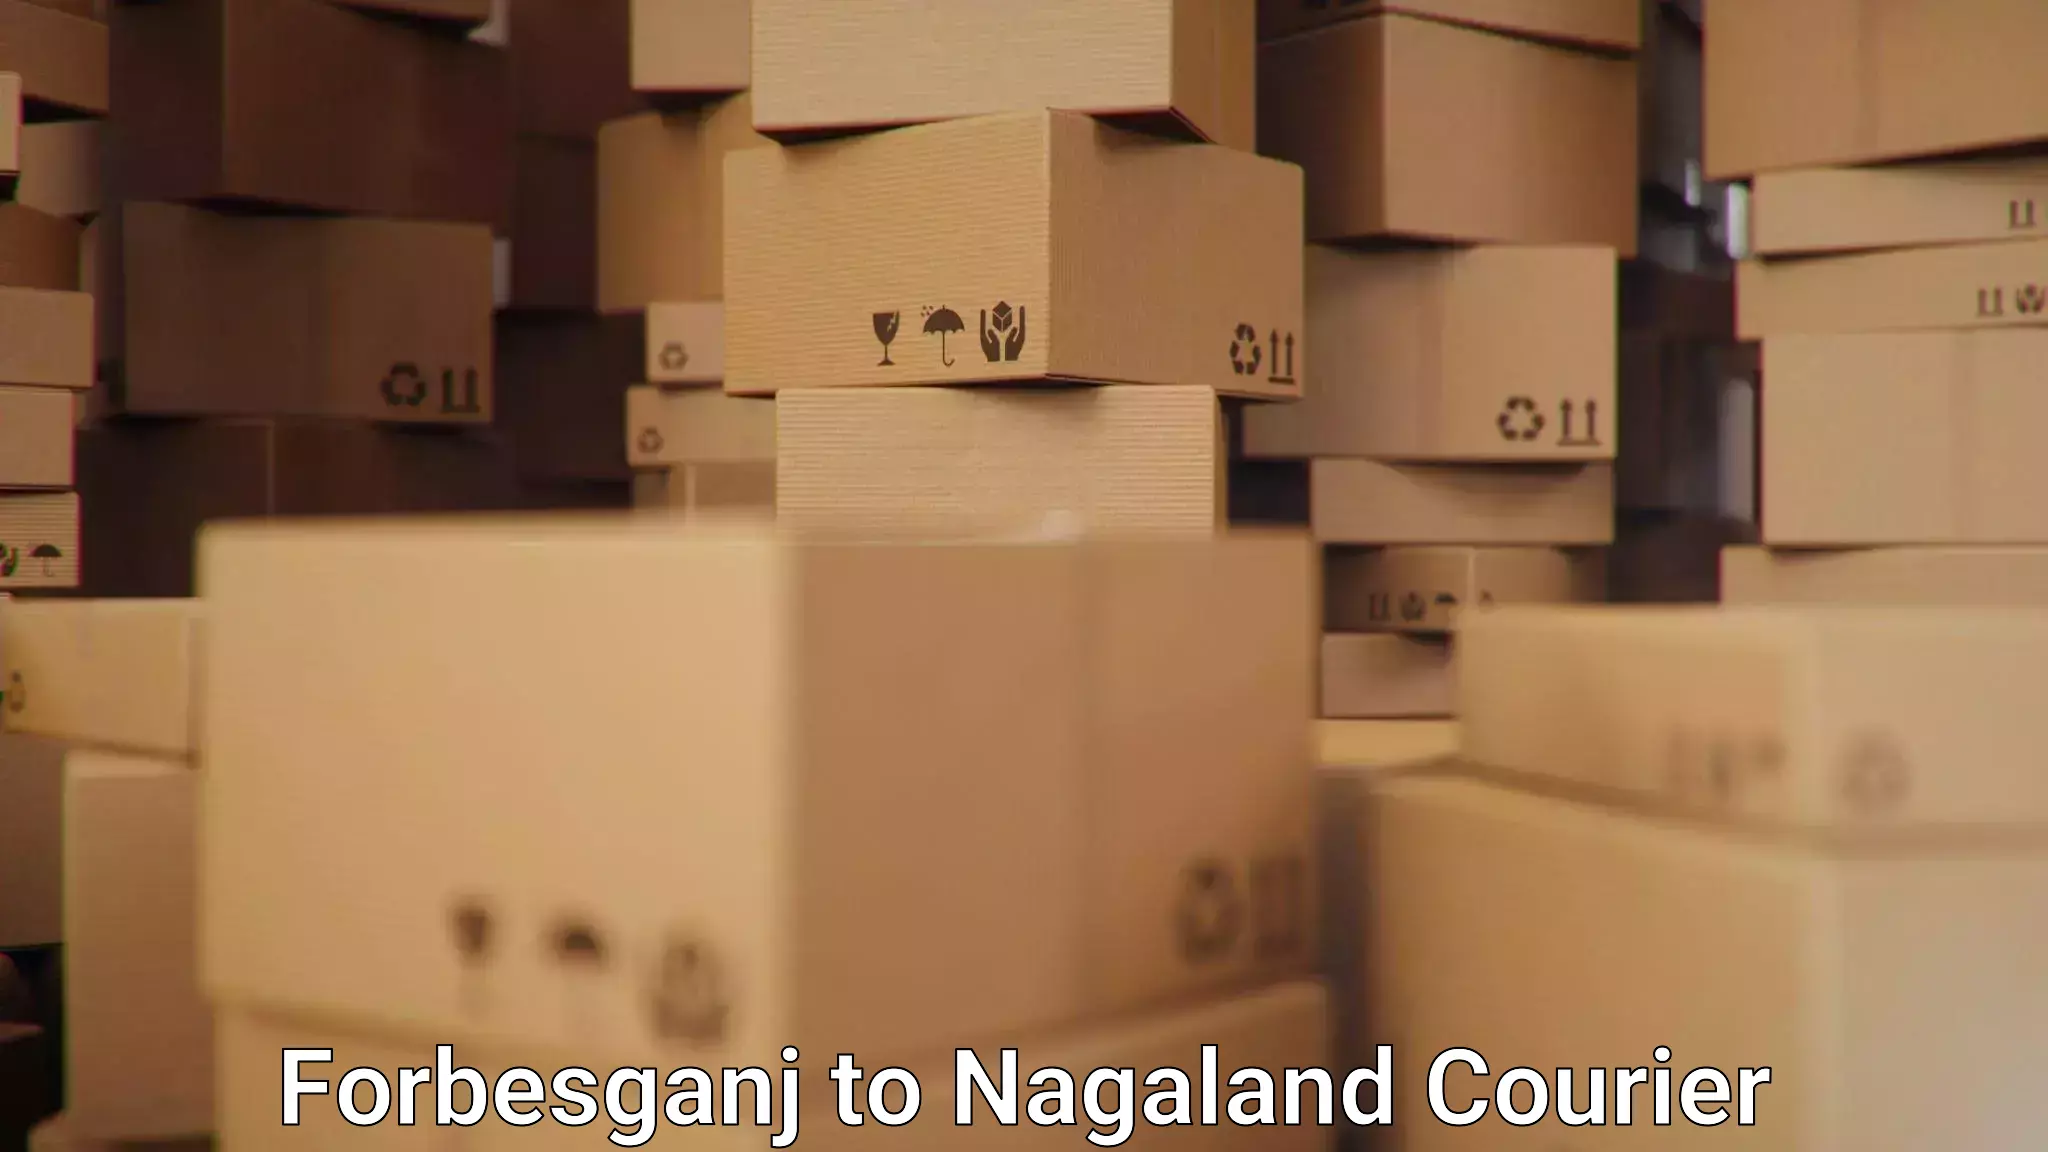 Reliable logistics providers Forbesganj to Nagaland